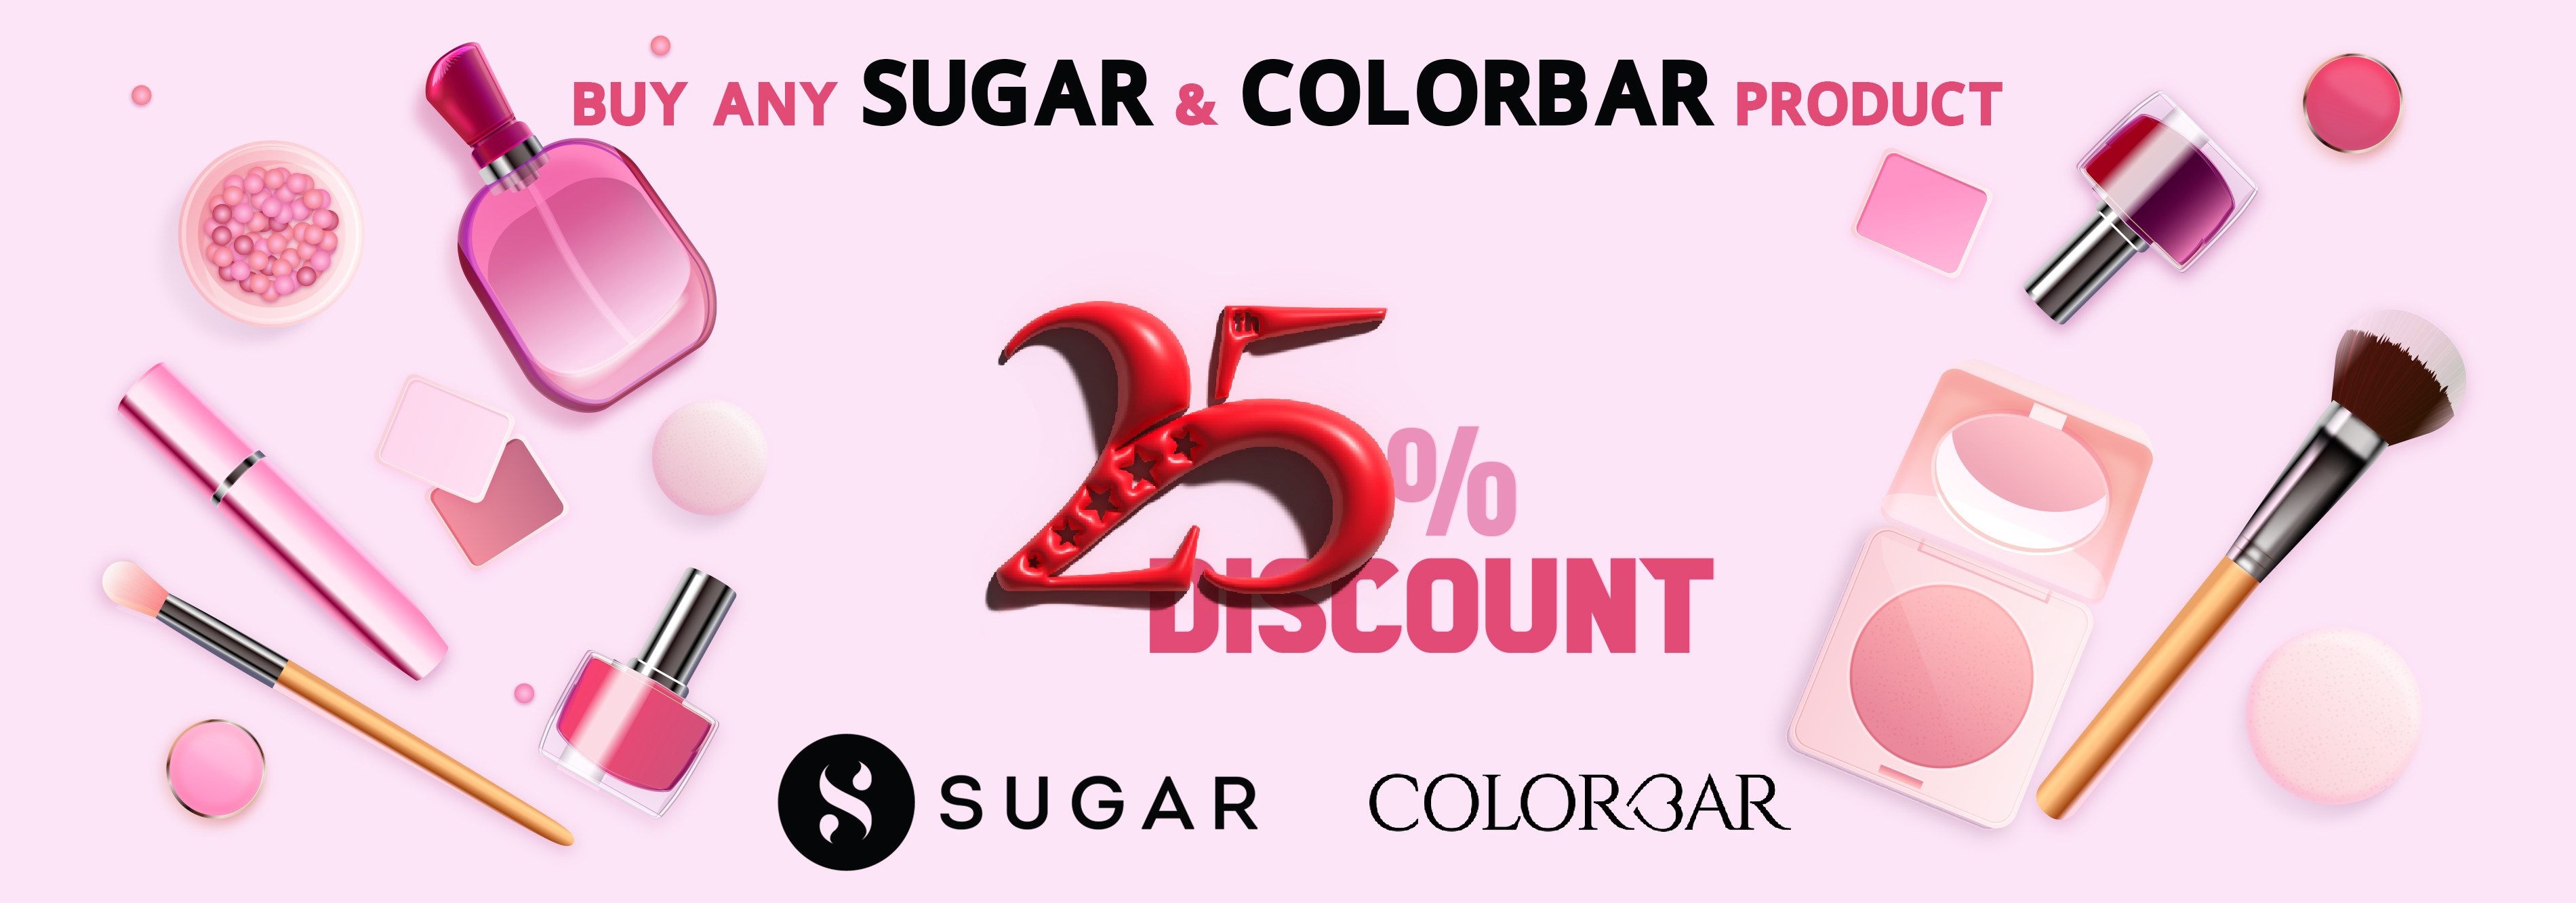 Sugar Colorbar 25 Limited Time Offer